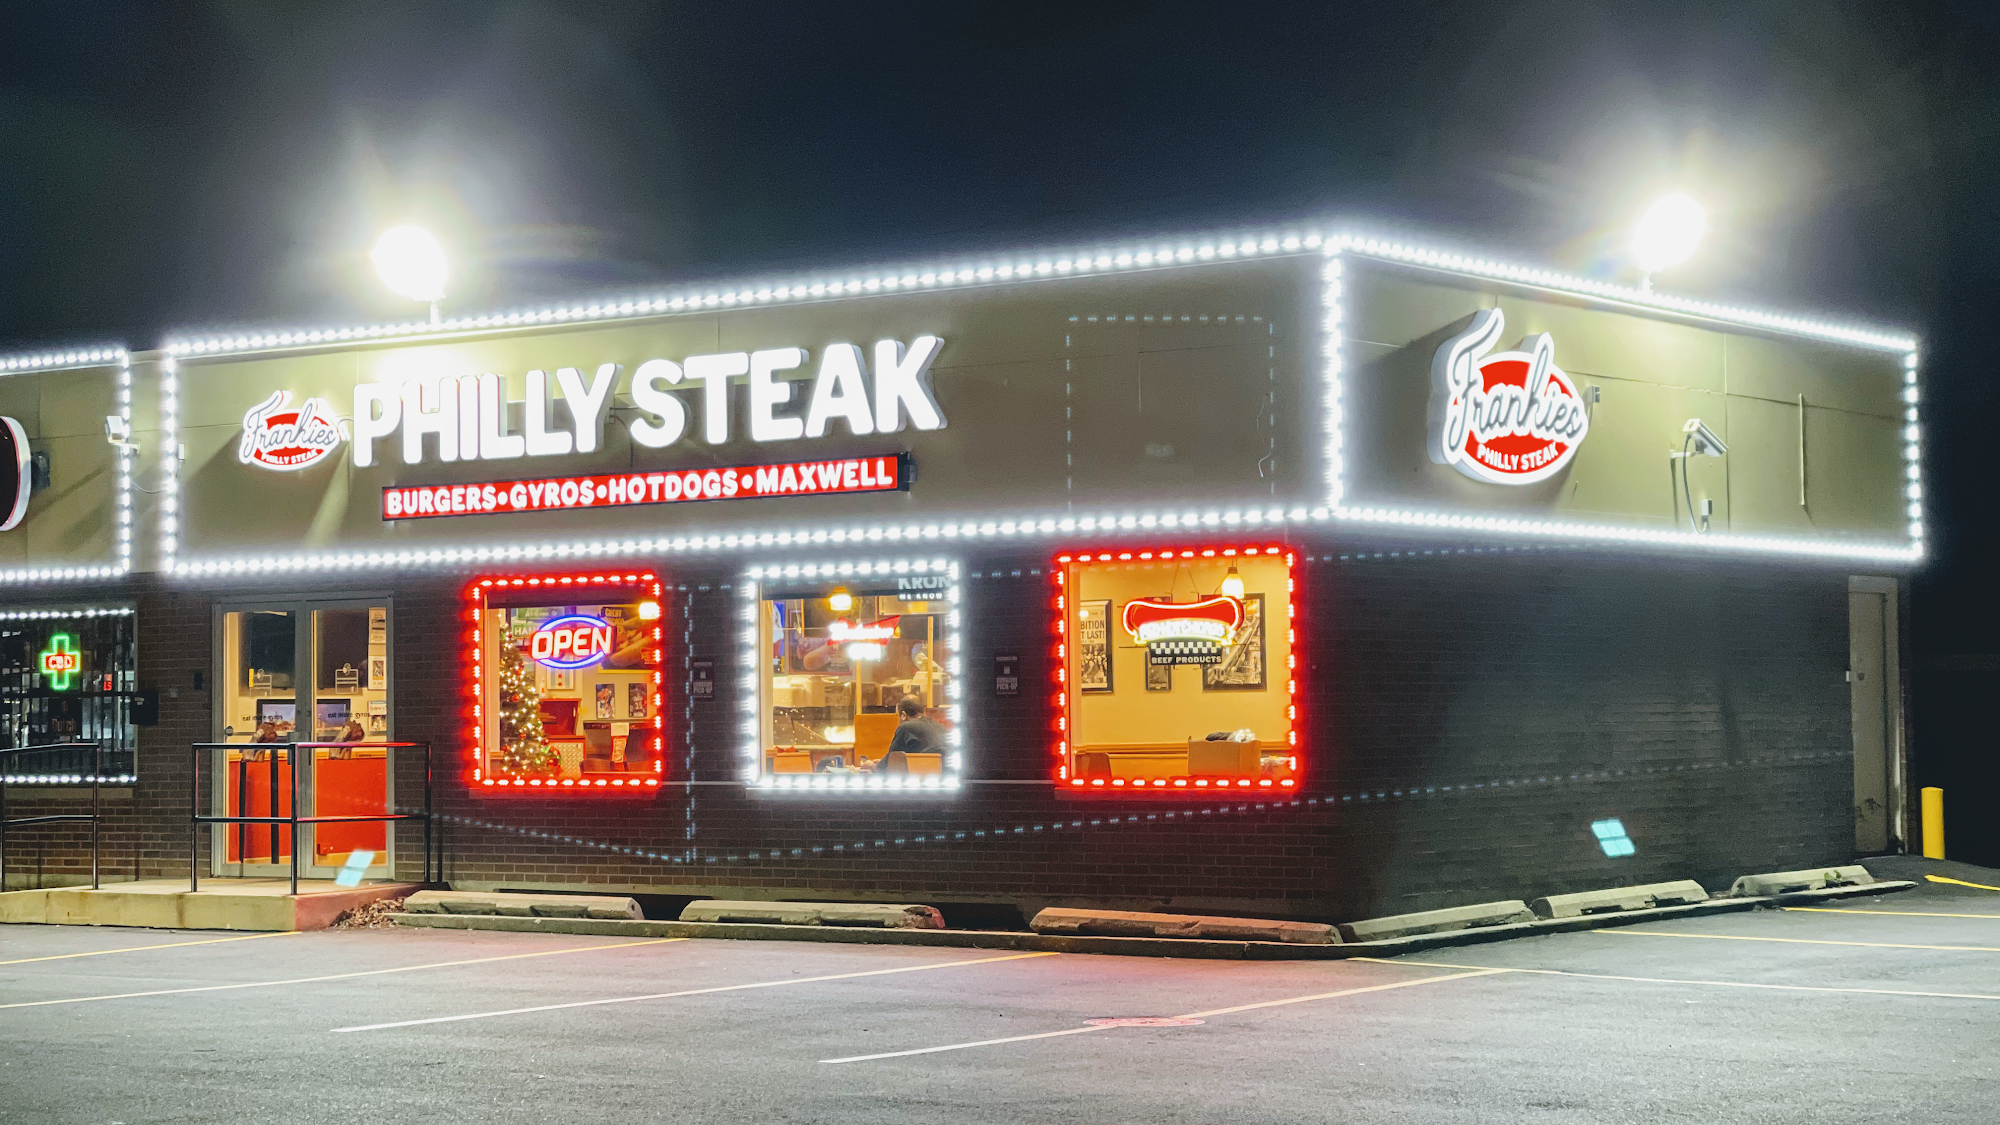 Frankie's Philly Steak